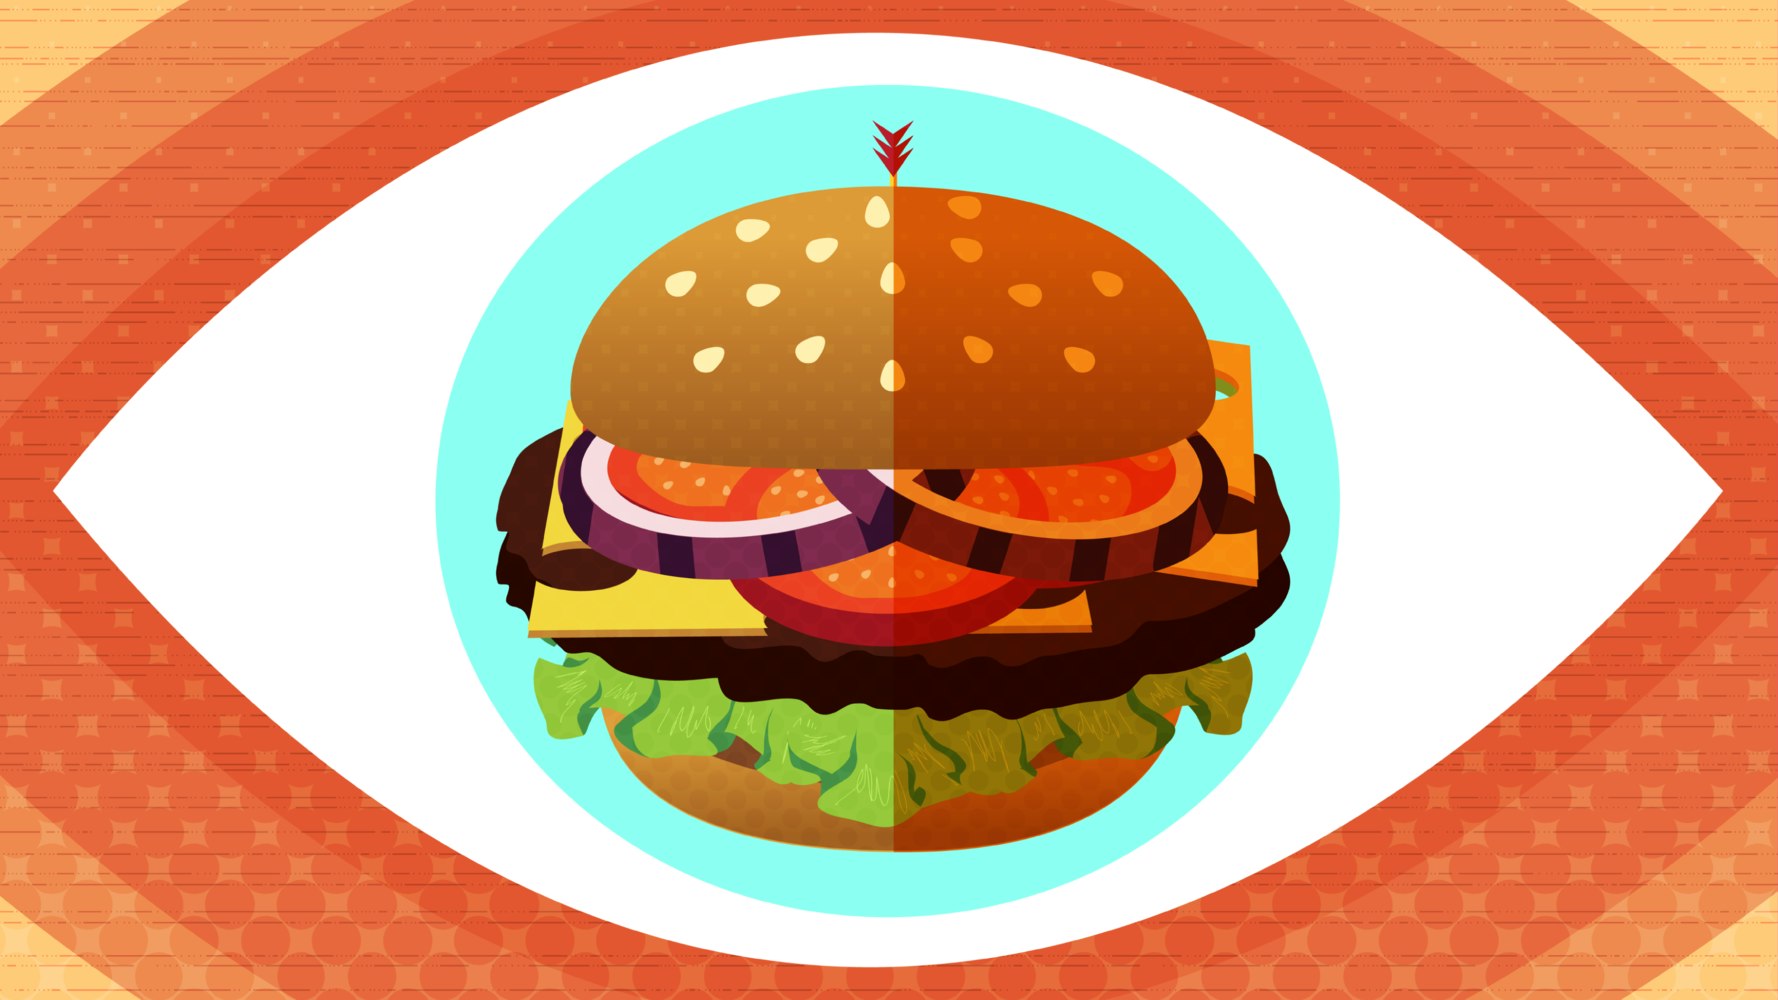 Cheeseburger at the centre of an eye